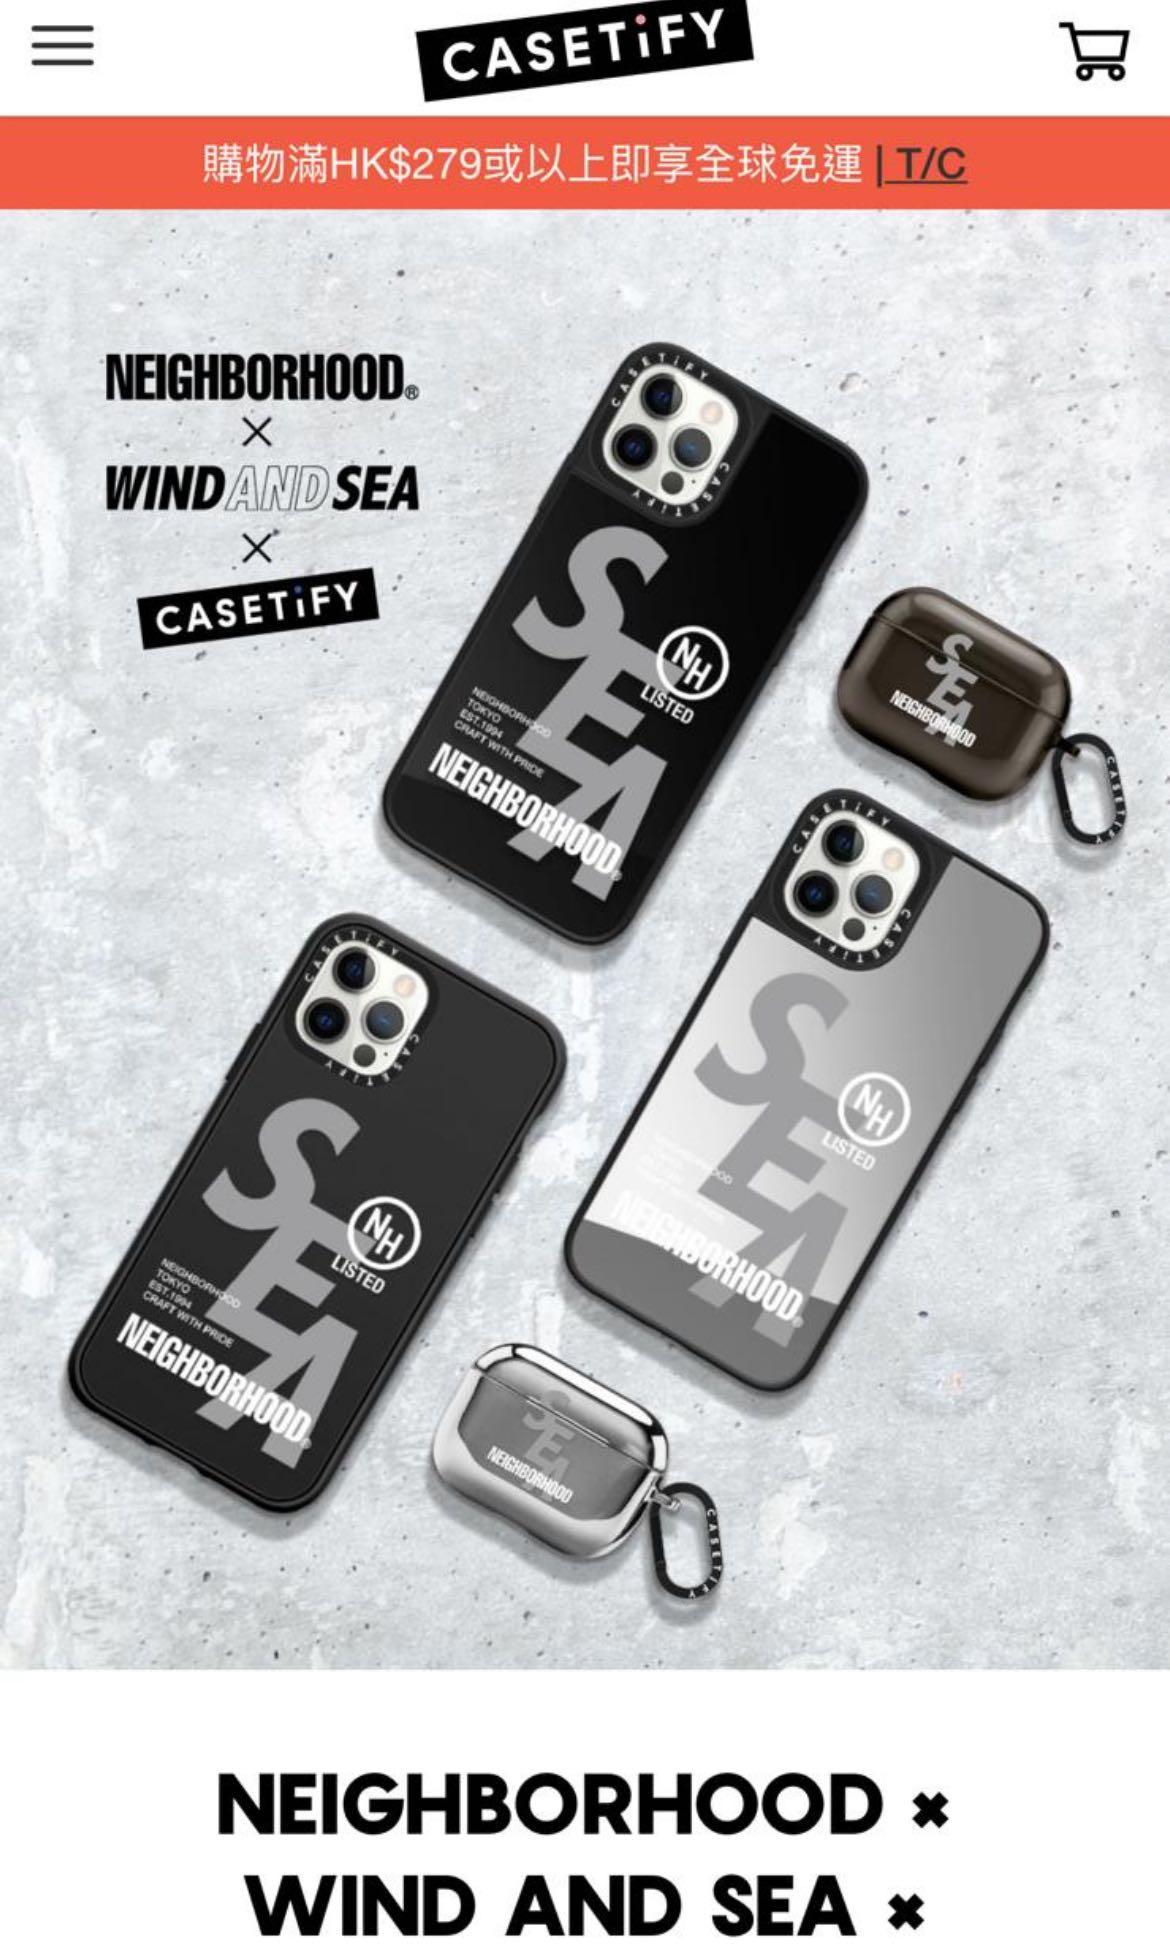 casetify x wind and sea x neighborhood, 手提電話, 手機, iPhone